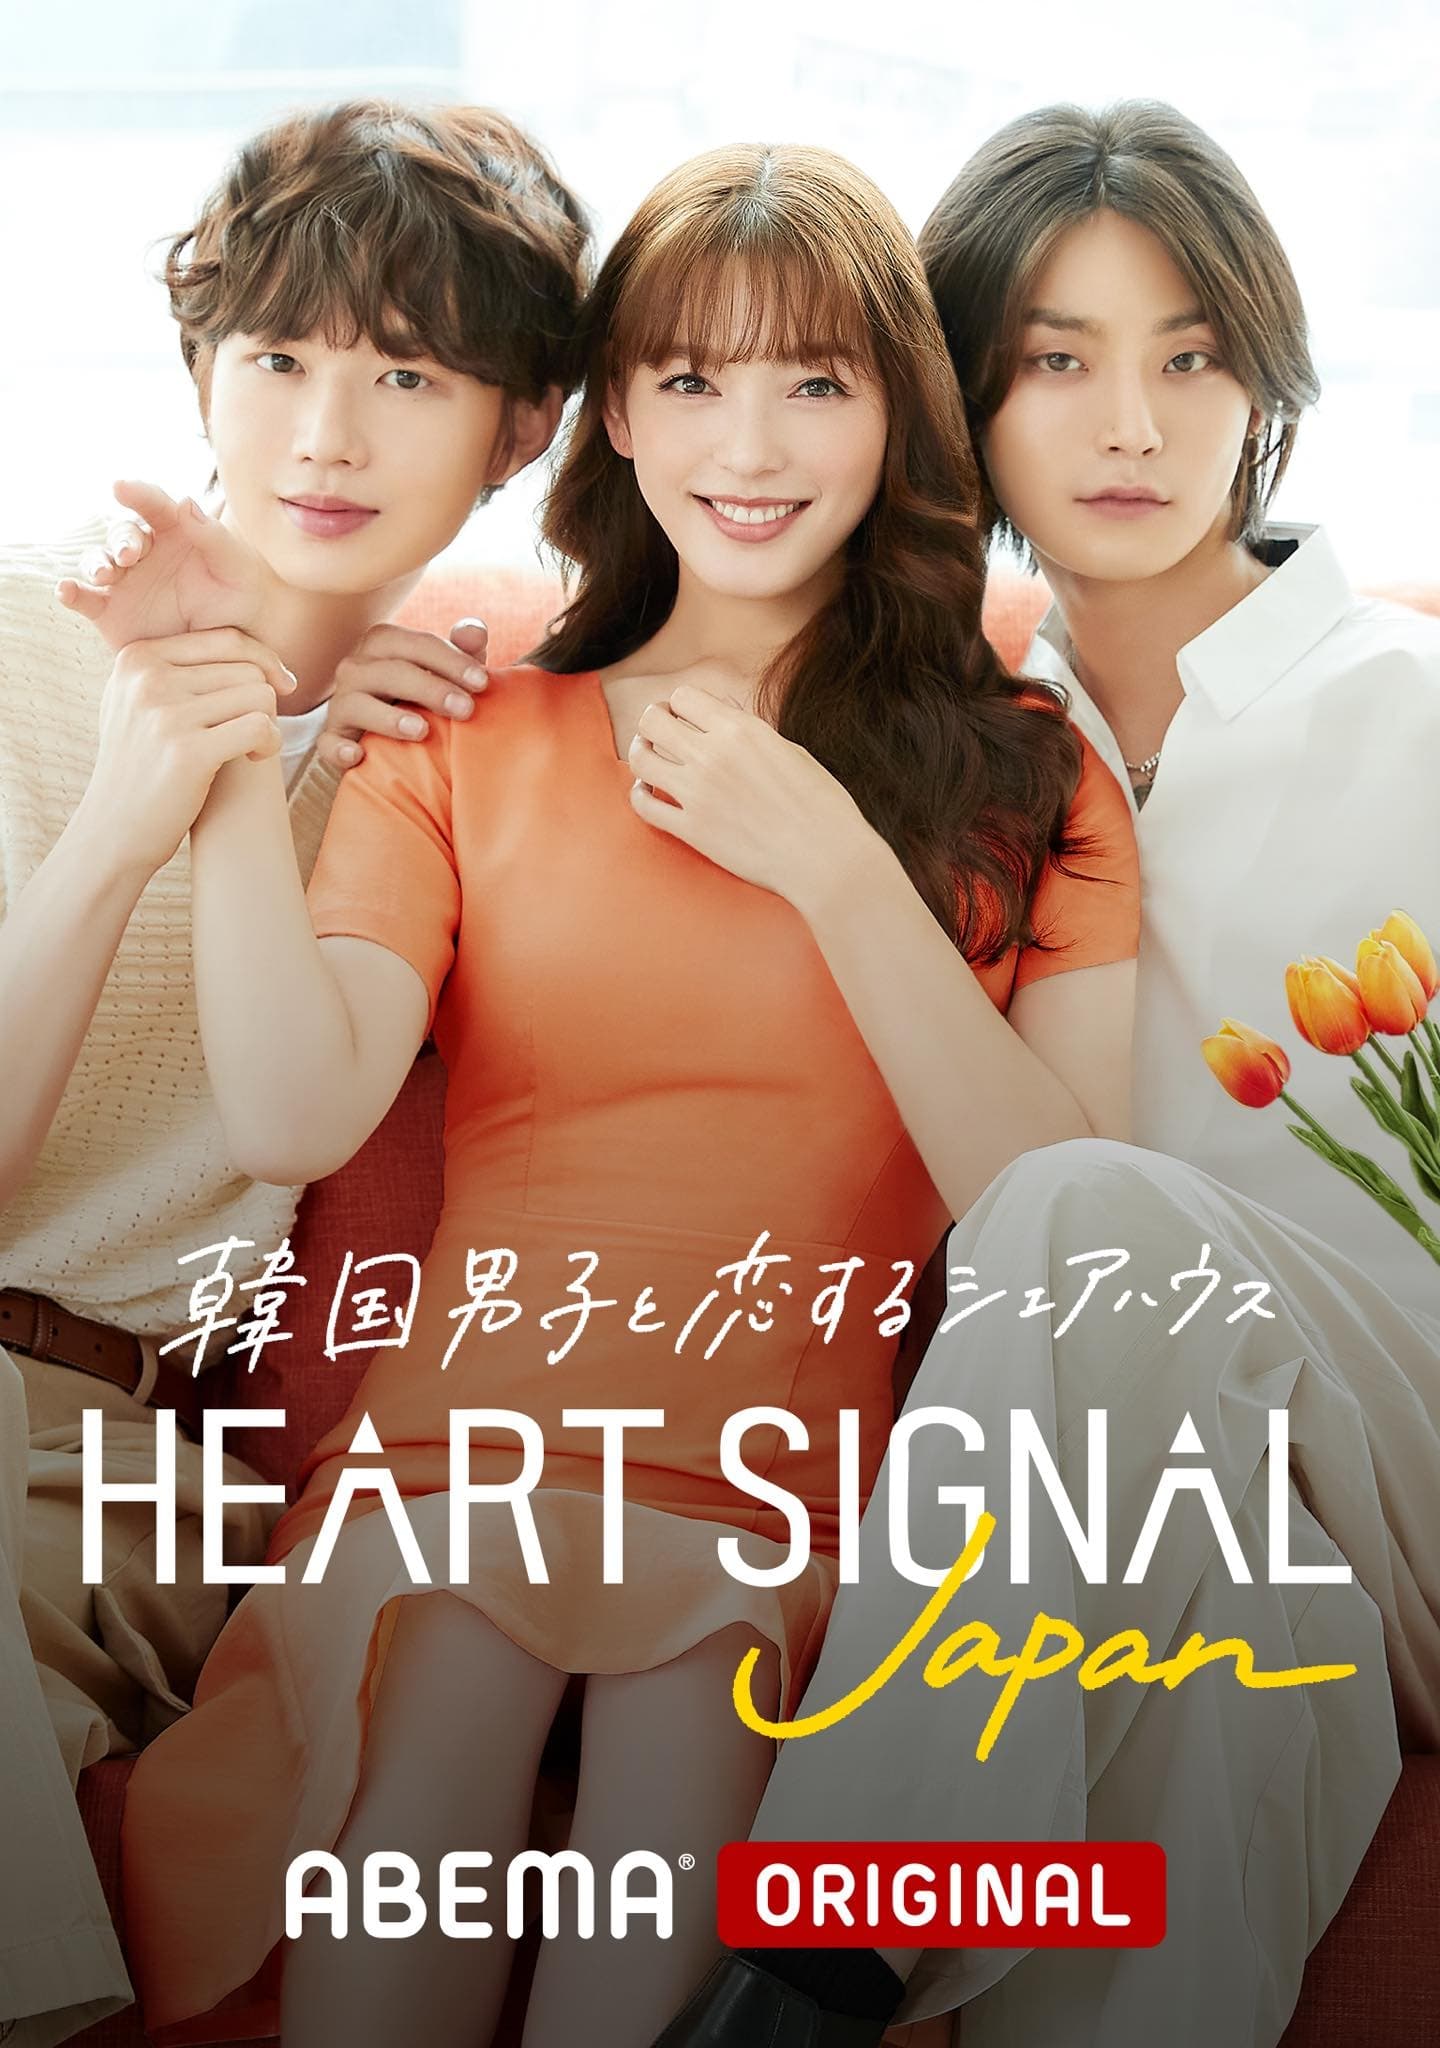 TV ratings for Heart Signal Japan in Norway. AbemaTV TV series